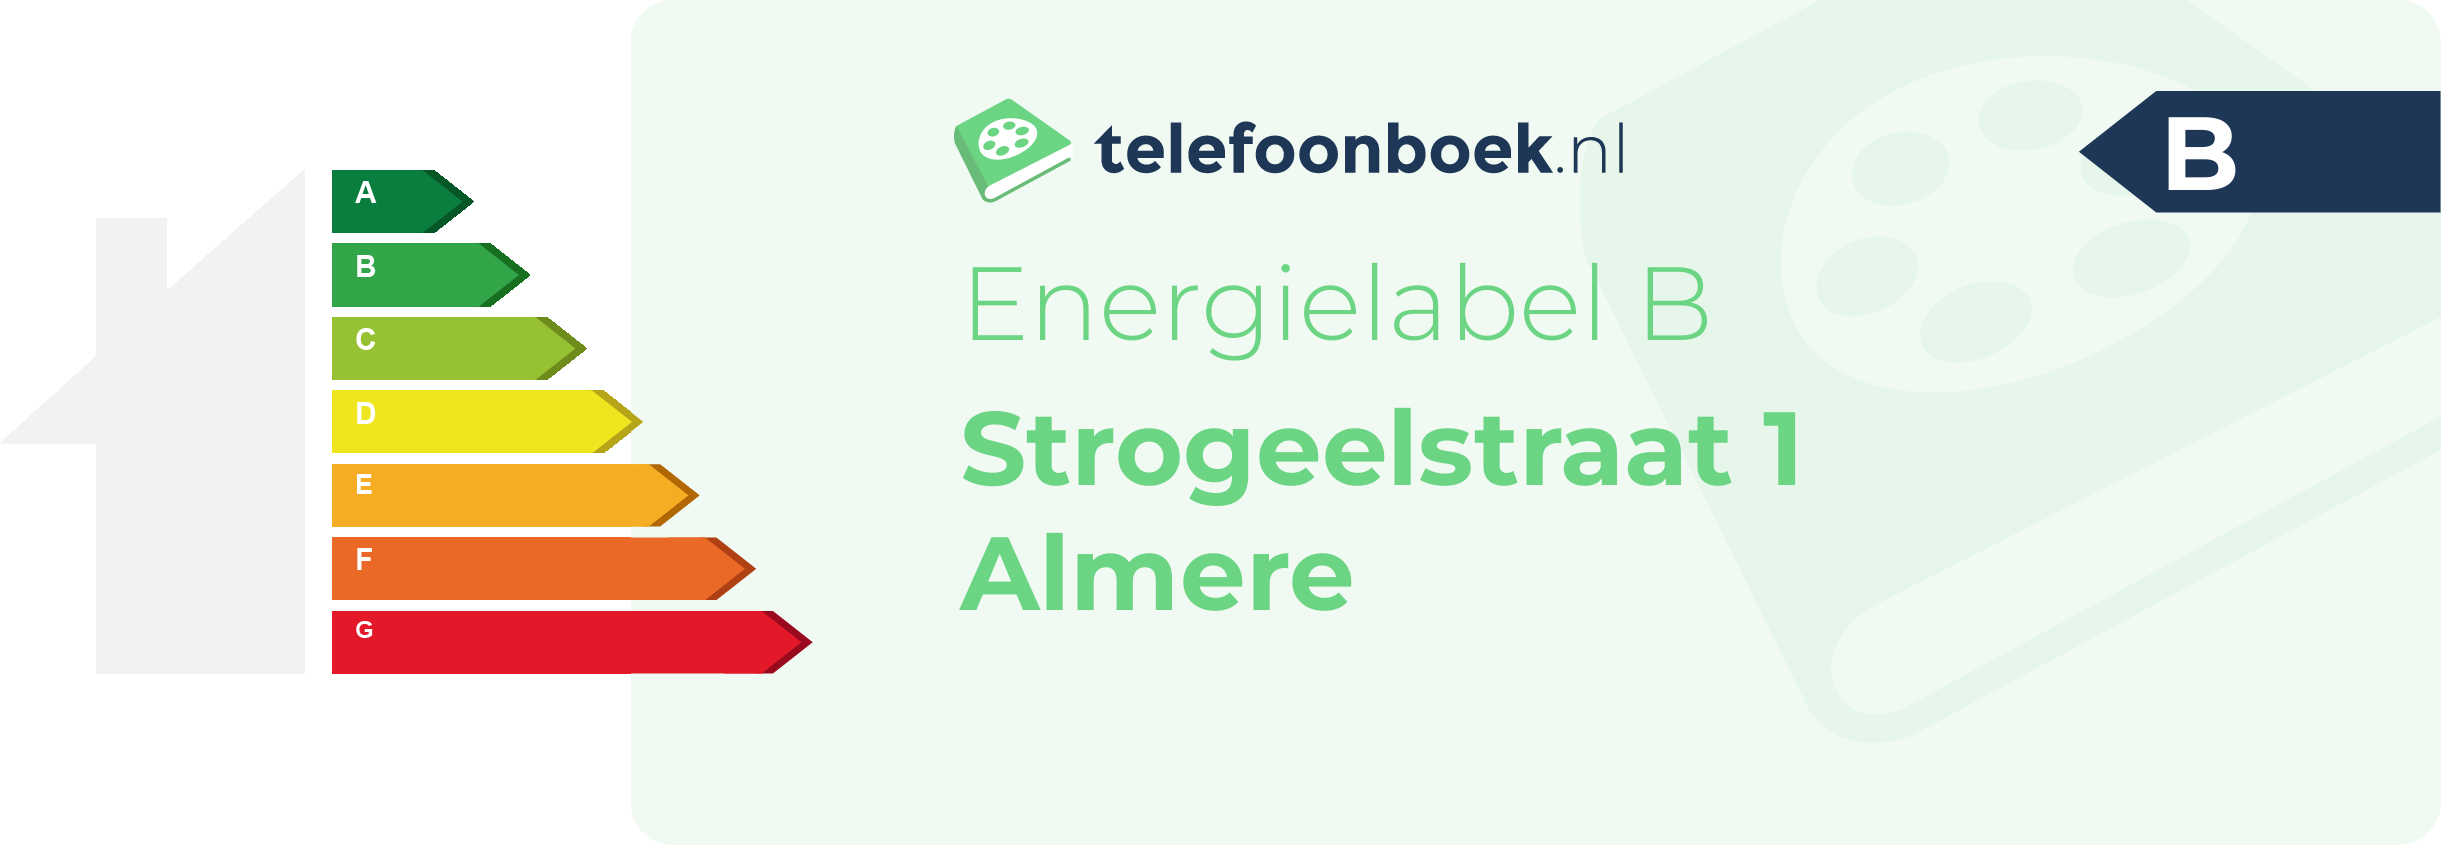 Energielabel Strogeelstraat 1 Almere